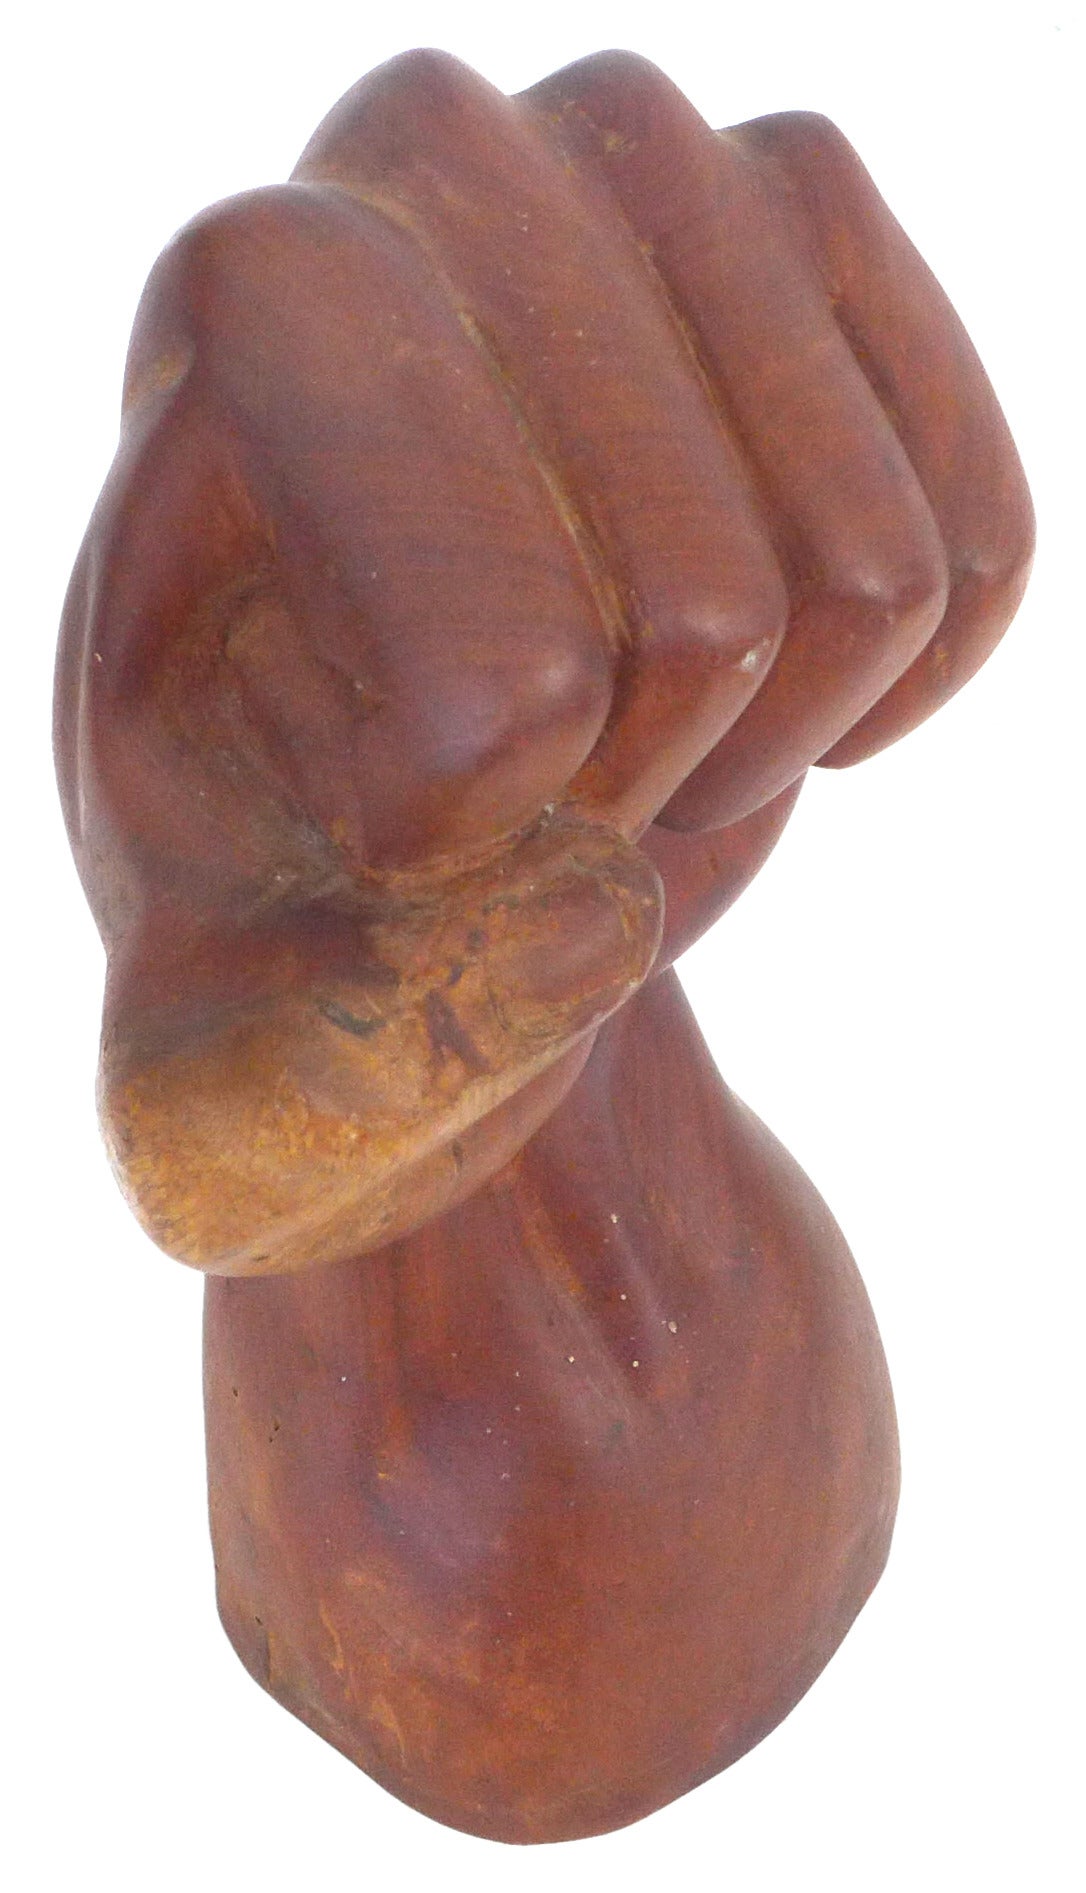 wooden fist statue